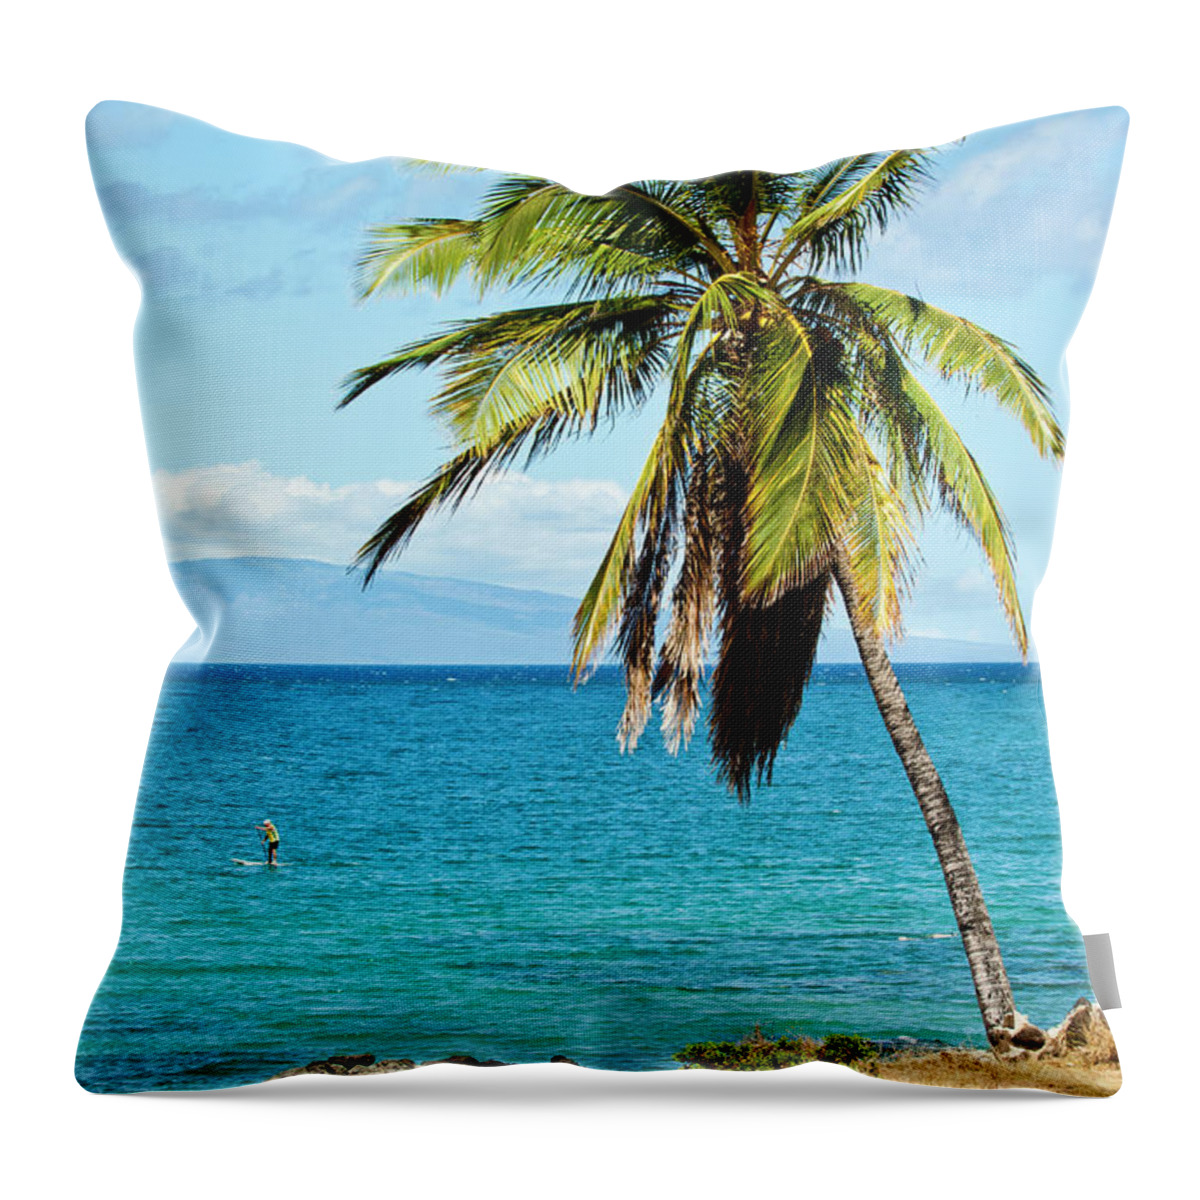 Hawaii Throw Pillow featuring the photograph Palms on Hawaiian beach 12 by Micah May